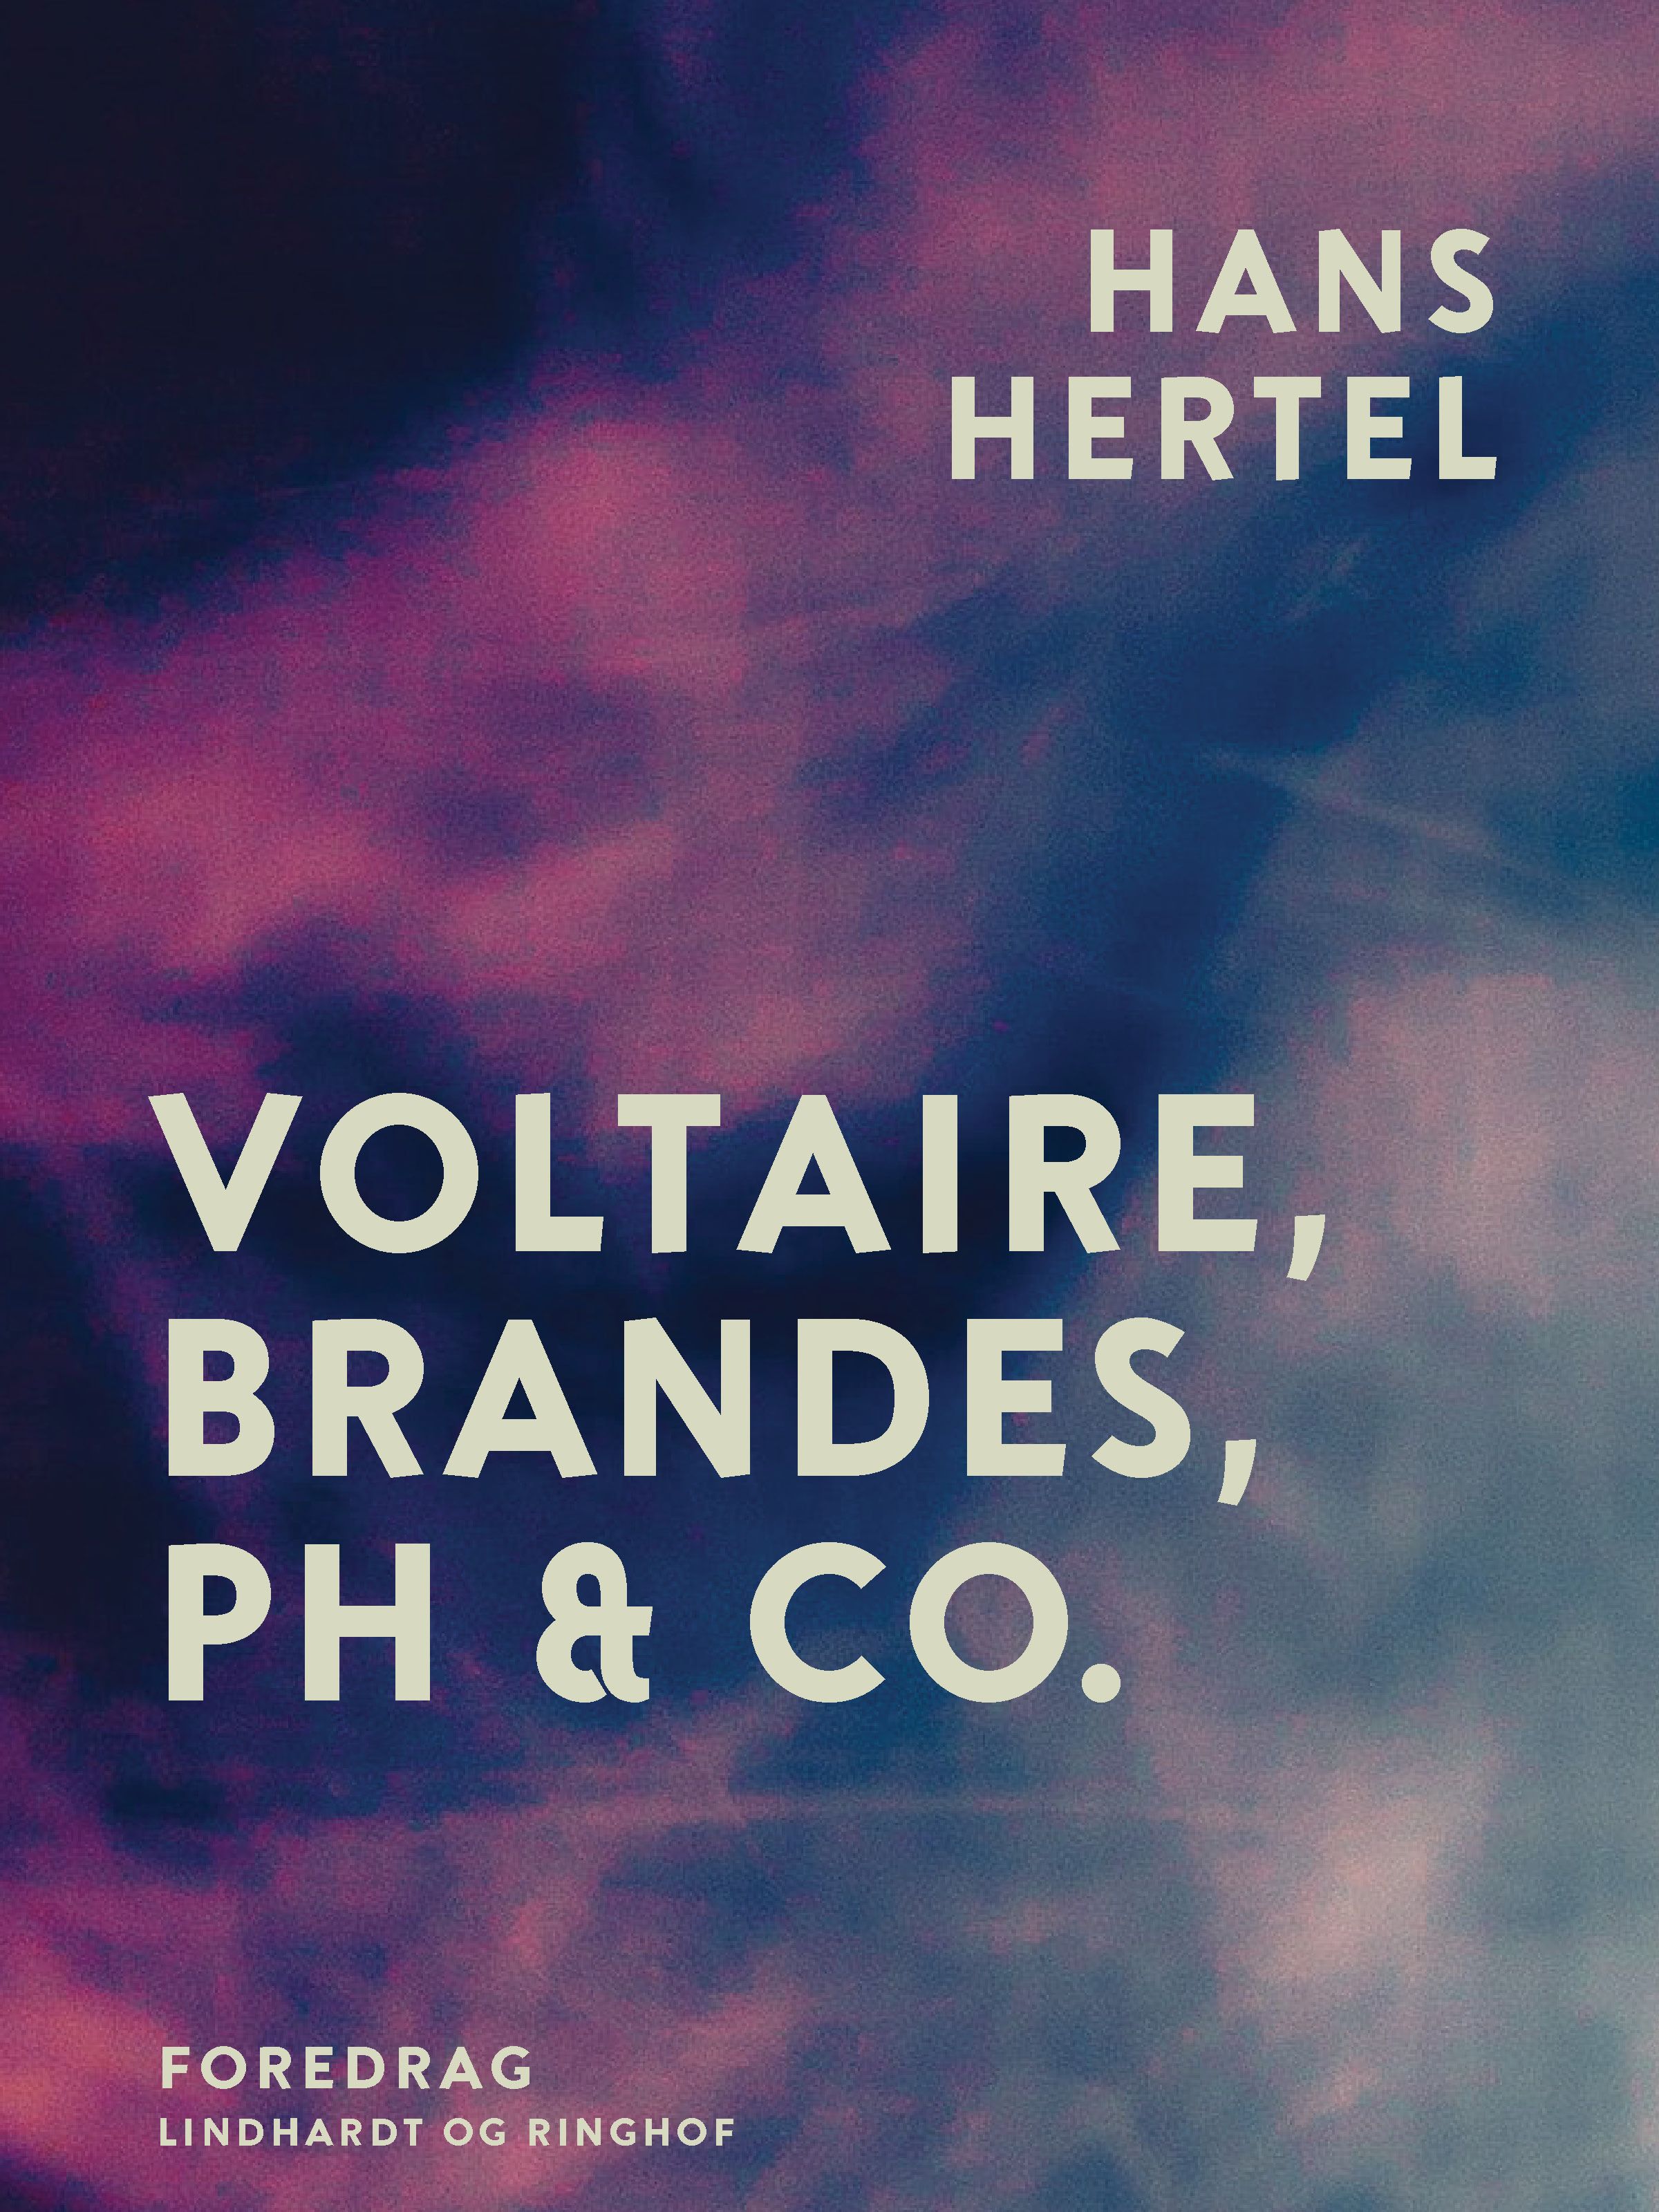 Voltaire, Brandes, PH & Co., eBook by Hans Hertel